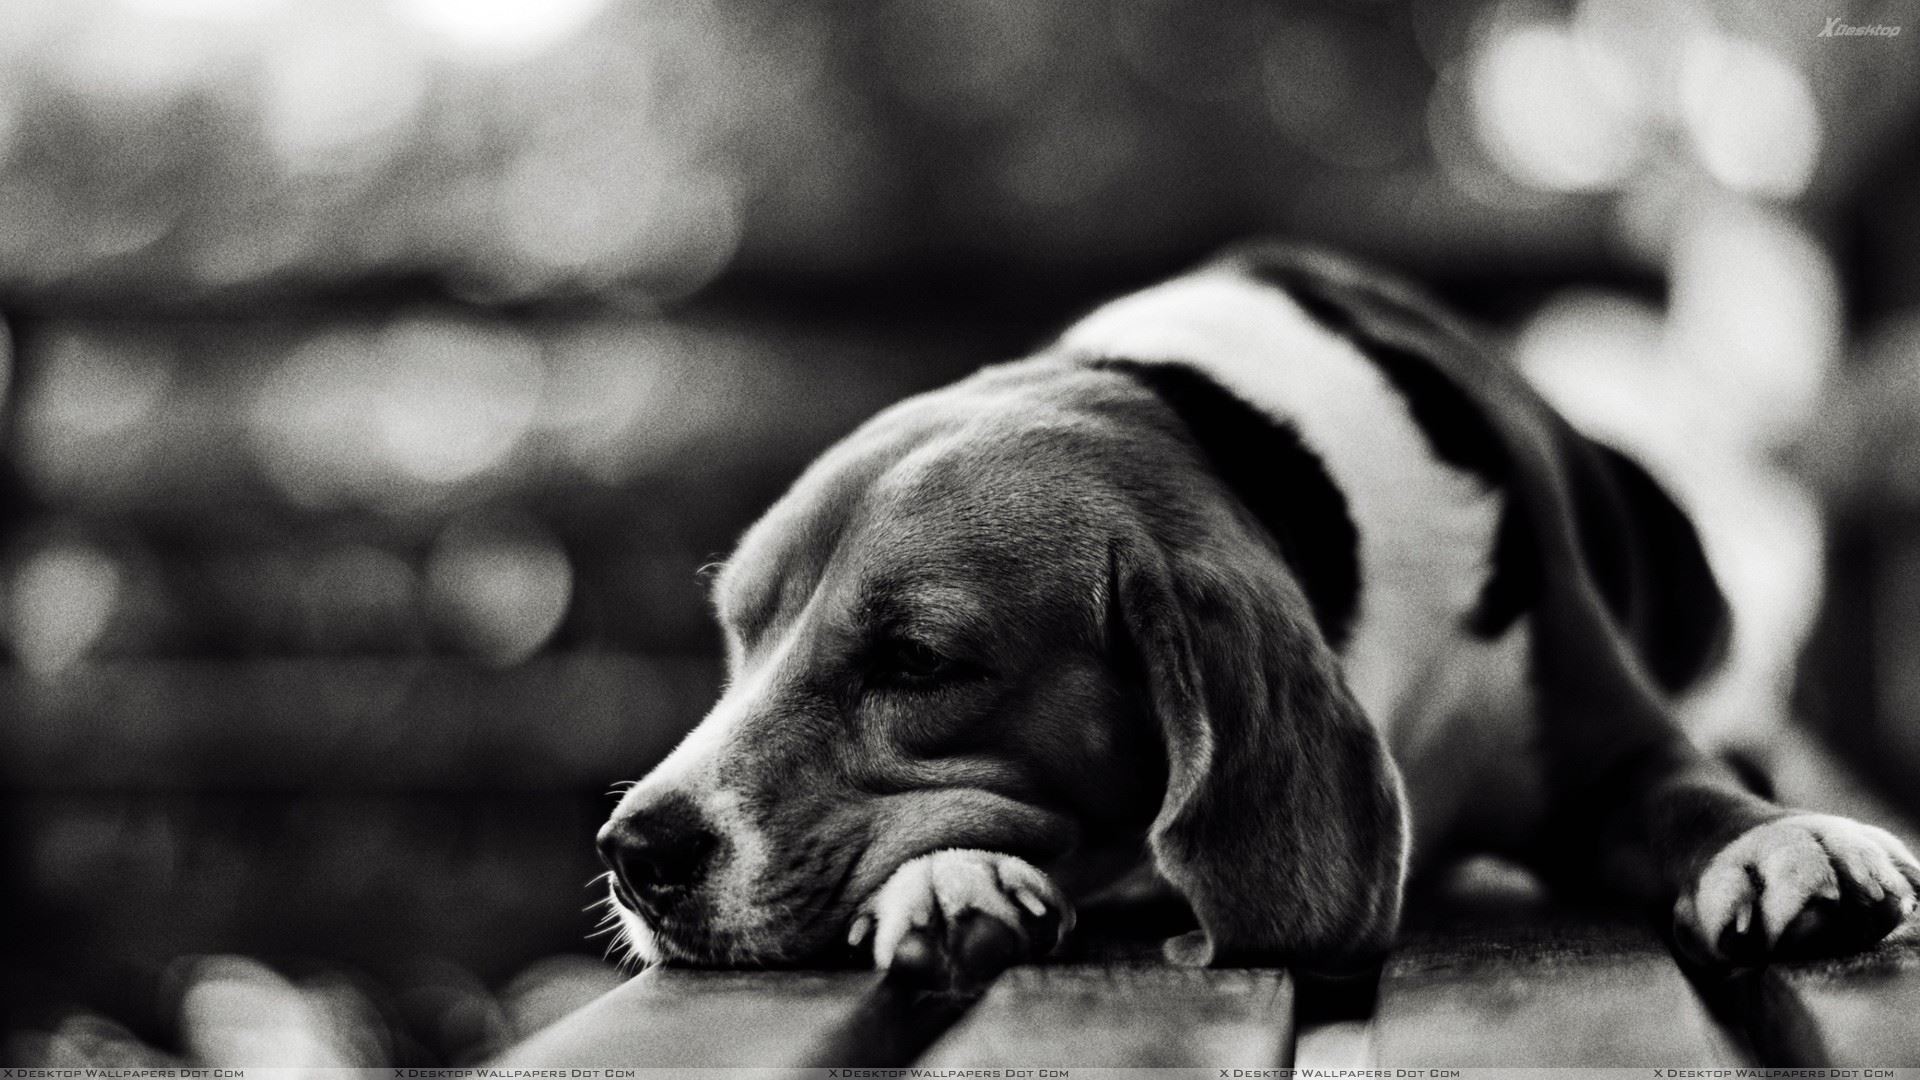 1920x1080 Cute Dog Sleeping Black N White Picture Wallpaper